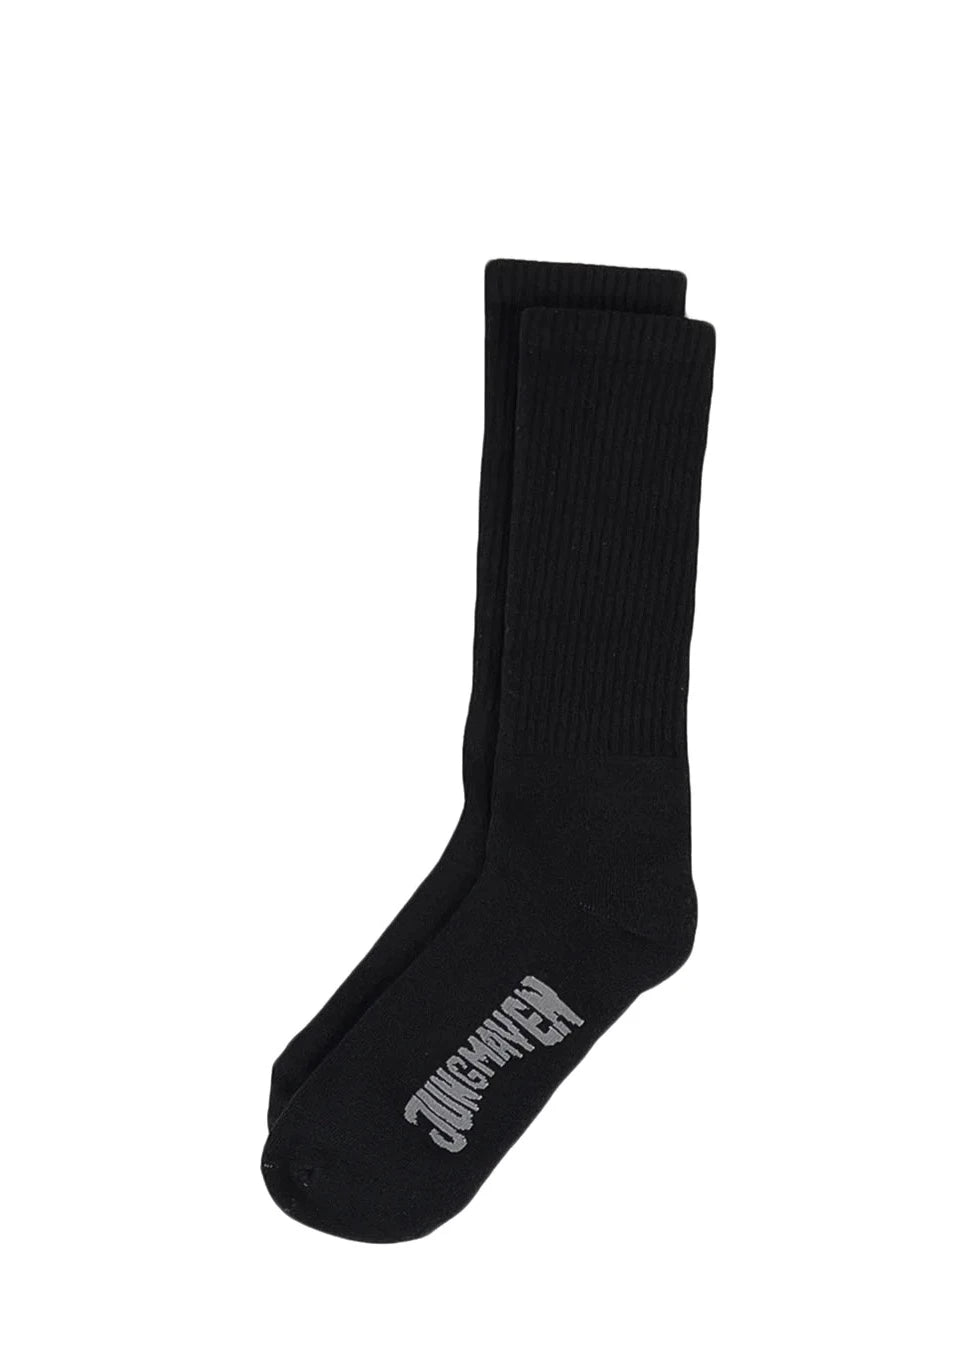 Hemp Crew Socks // Black